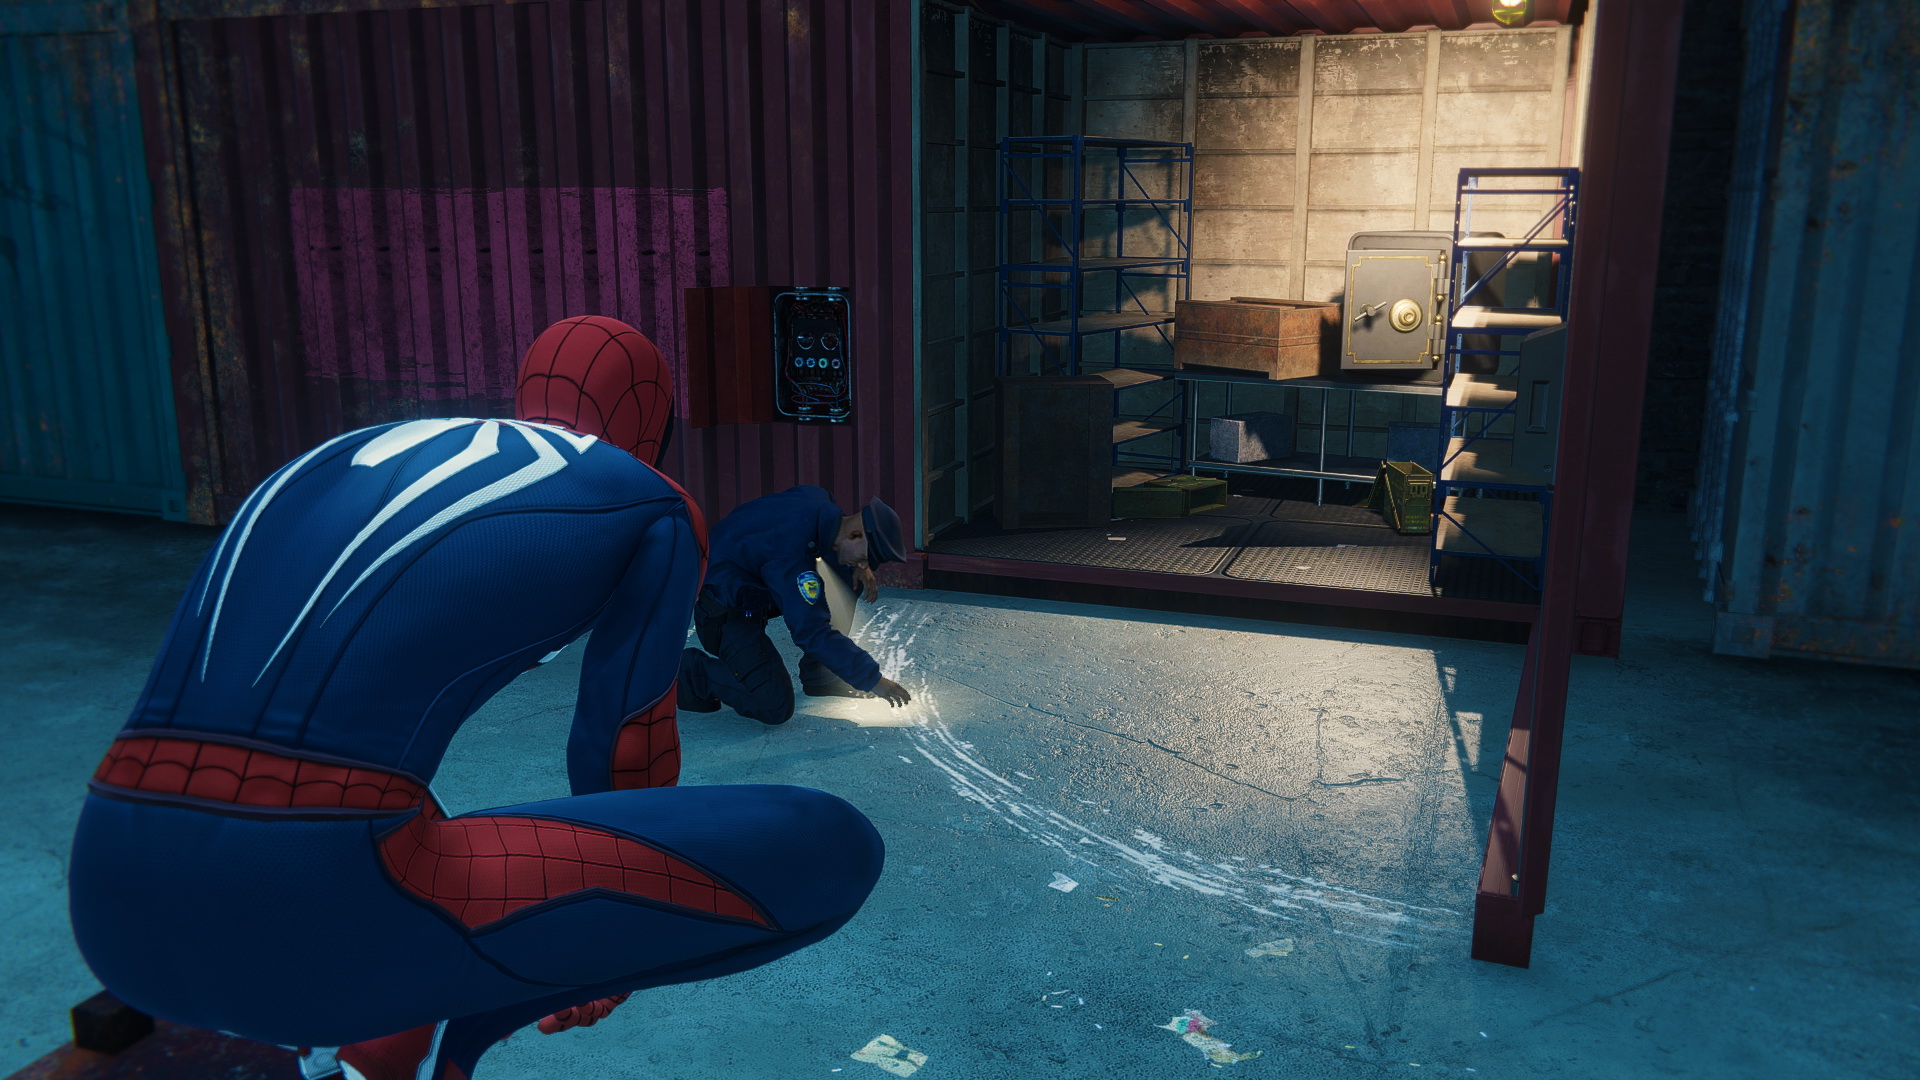 Marvel's Spider-Man Remastered PC - Test wydajności kart